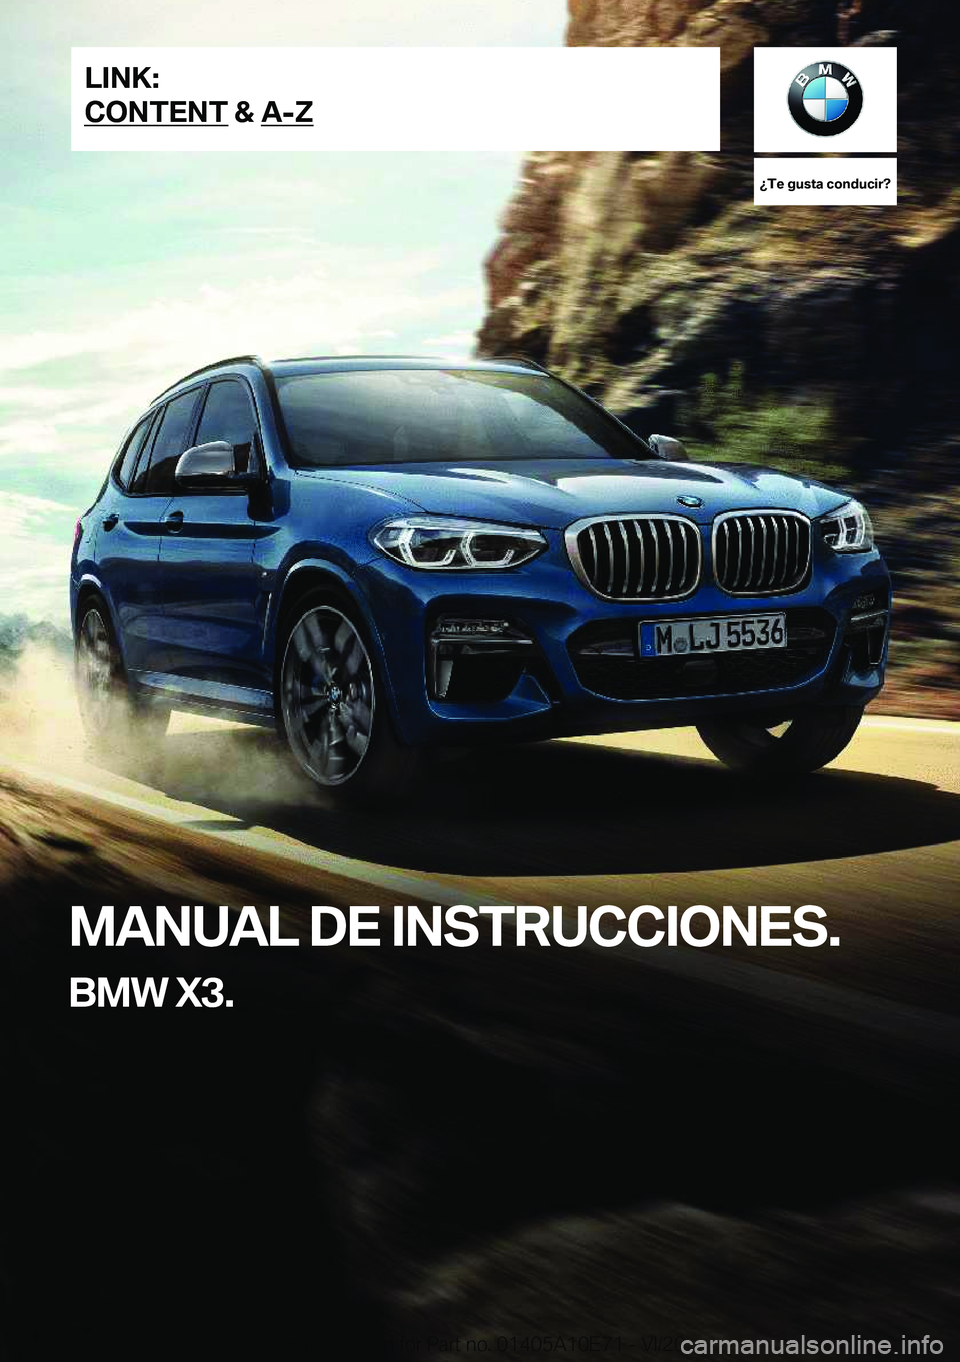 BMW X3 2021  Manuales de Empleo (in Spanish) ��T�e��g�u�s�t�a��c�o�n�d�u�c�i�r� 
�M�A�N�U�A�L��D�E��I�N�S�T�R�U�C�C�I�O�N�E�S�.
�B�M�W��X�3�.�L�I�N�K�:
�C�O�N�T�E�N�T��&��A�-�Z�O�n�l�i�n�e��E�d�i�t�i�o�n��f�o�r��P�a�r�t��n�o�.��0�1�